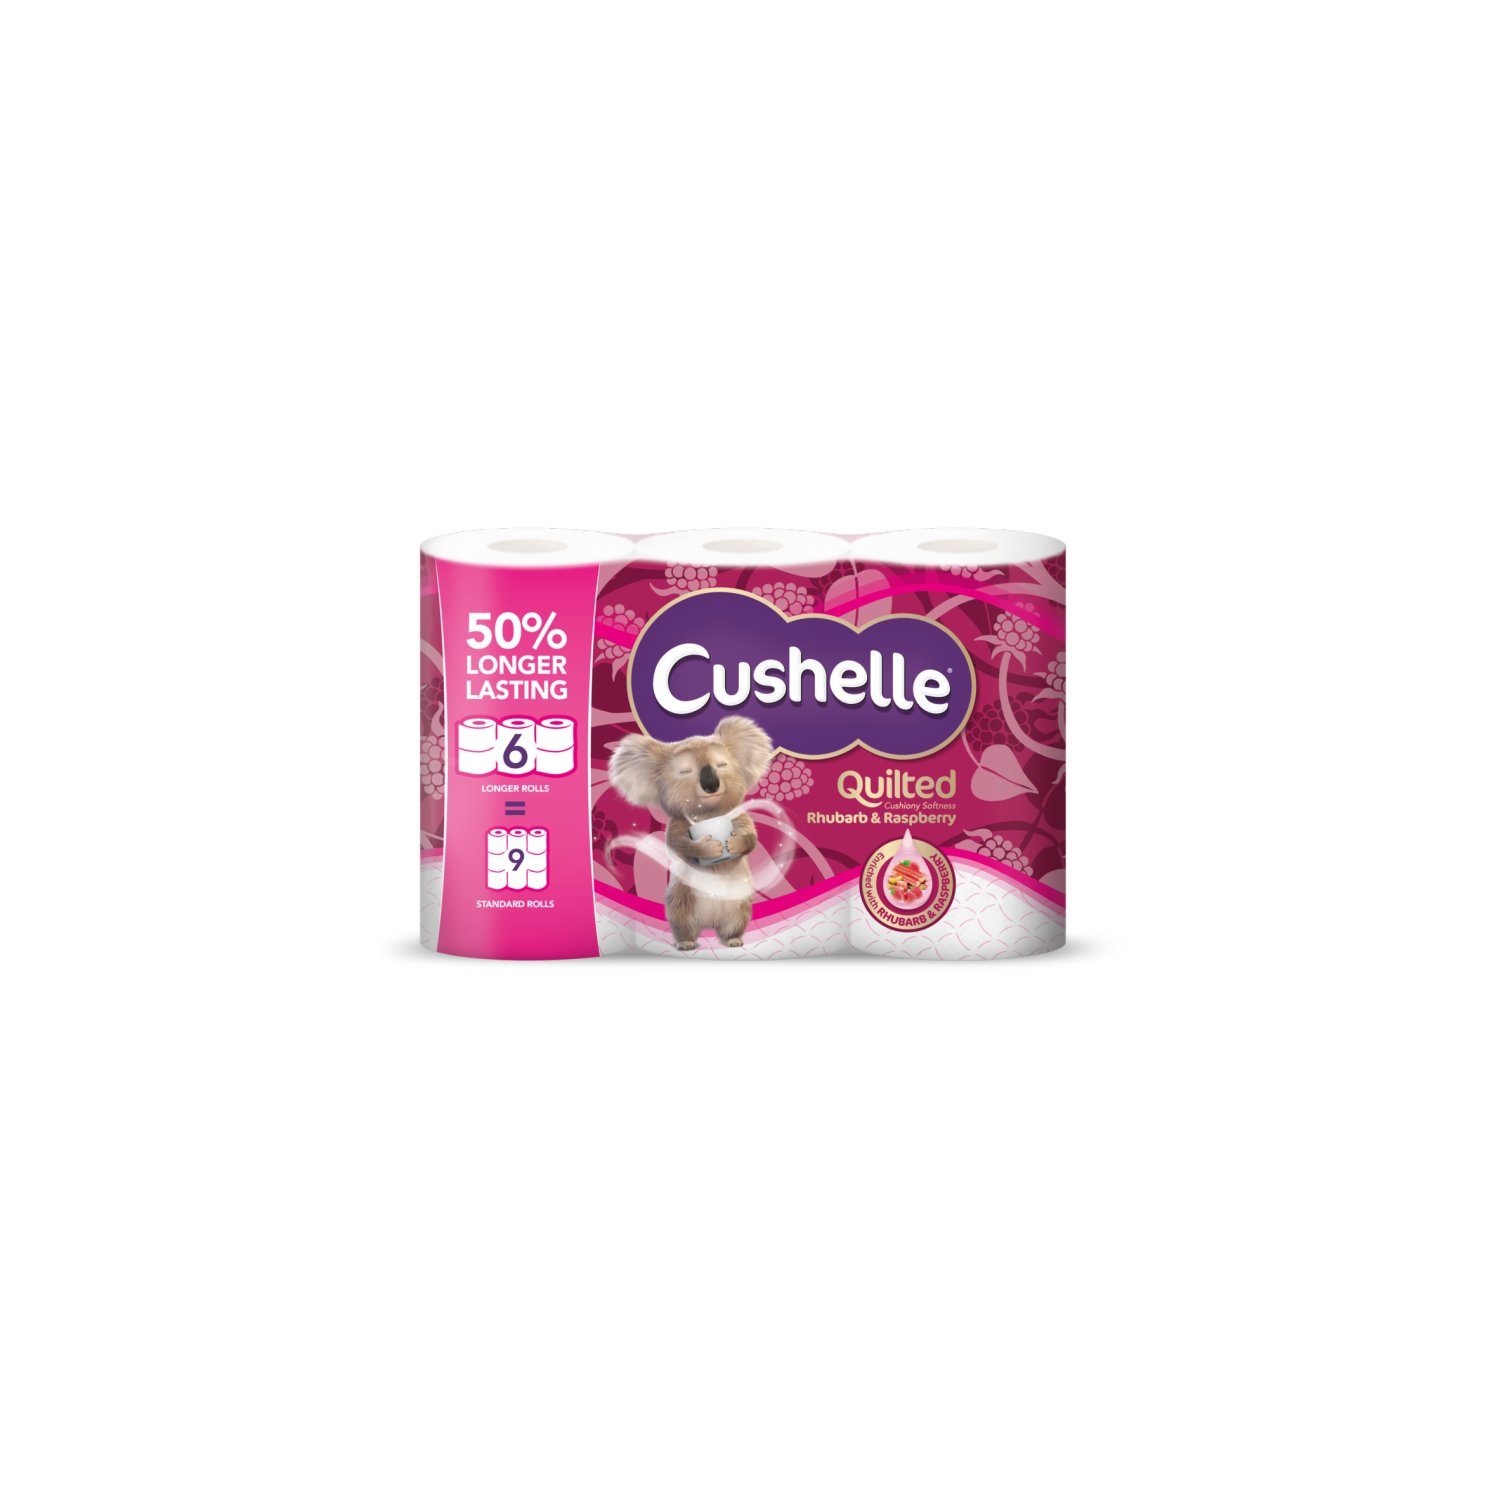 Cushelle Quilted Rhubard & Raspberry 50% Longer Toilet Tissue 6 Equals 9 Regular (6 Roll)